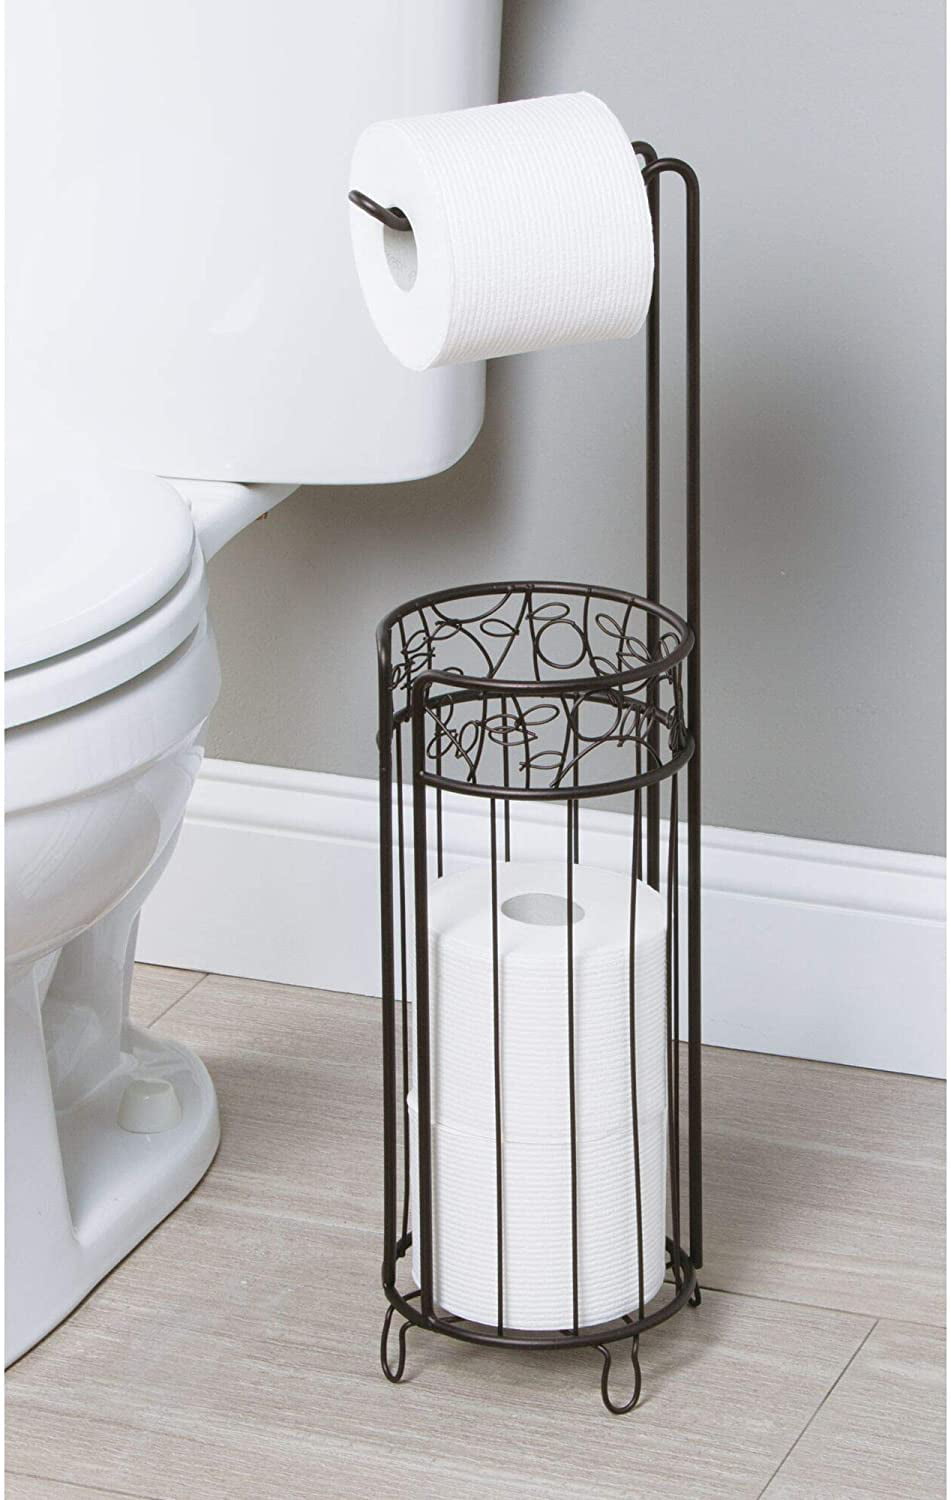 Details about   iDesign Twigz Steel Free Standing Toilet Paper Roll Holder Bathroom Dispenser 